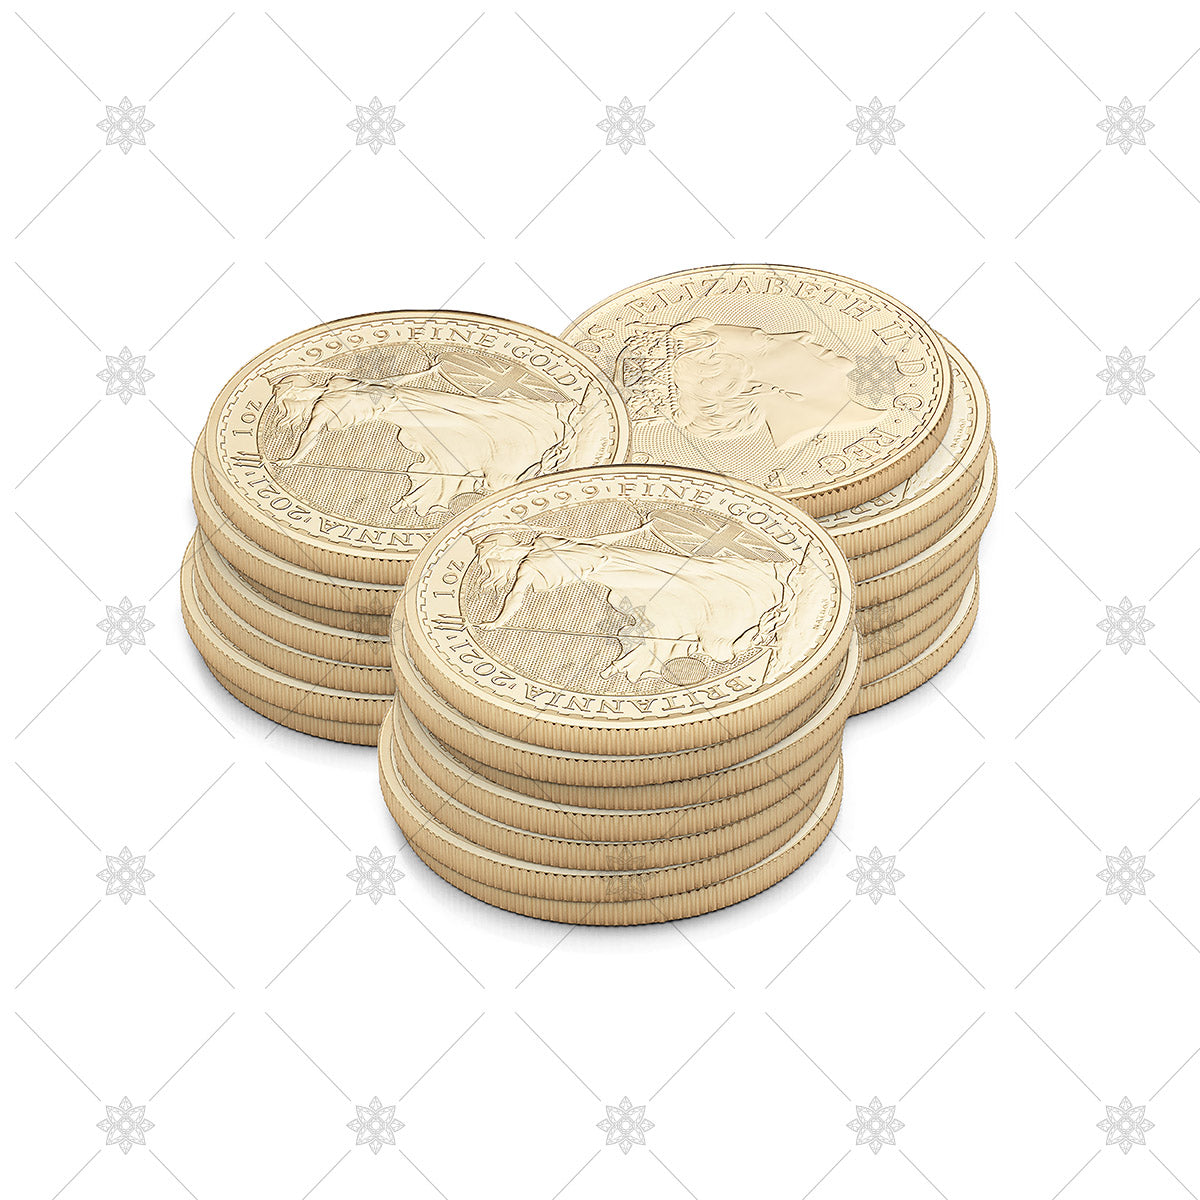 Gold bullion coin triple stack